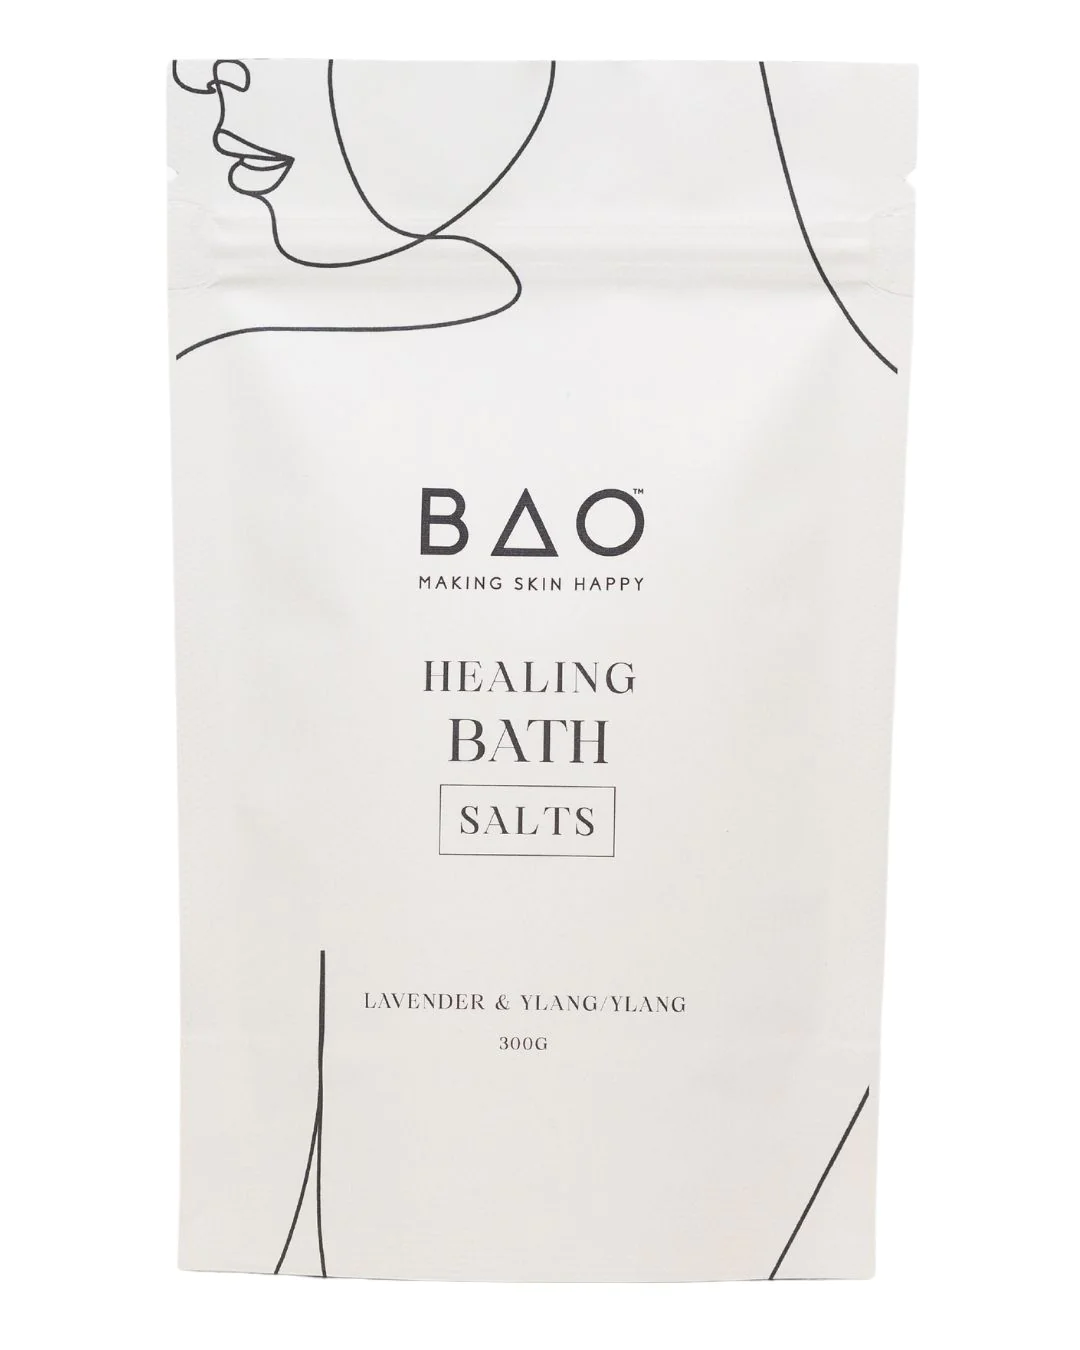 BAO - HEALING BATH SALTS